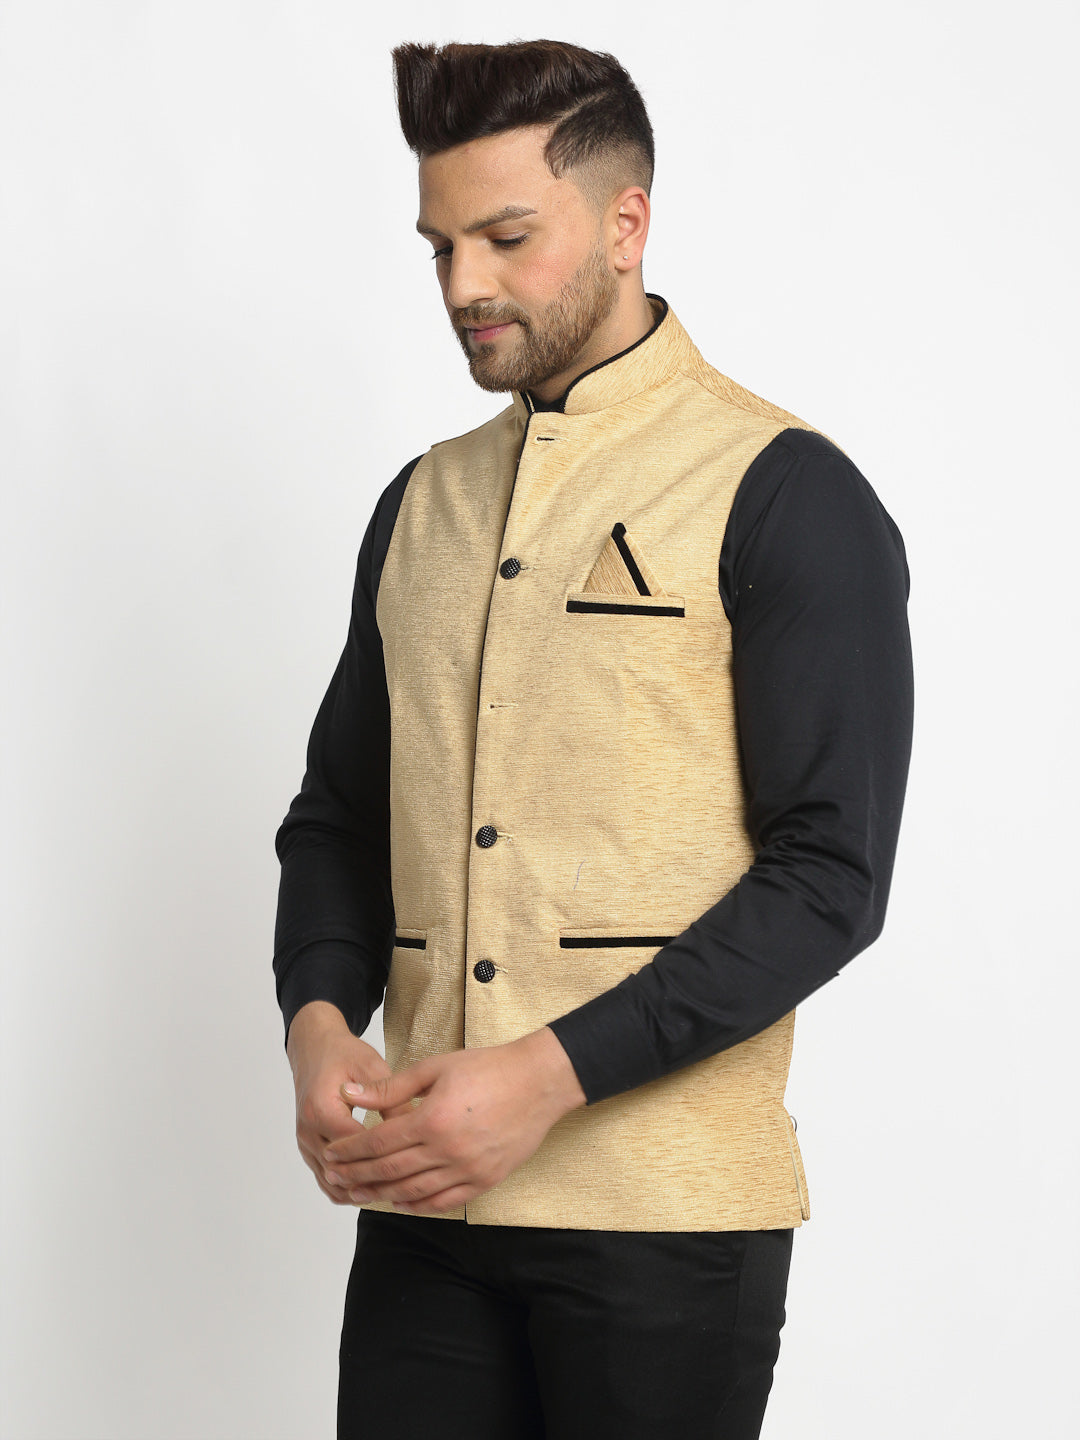 Jompers Men's Beige Solid Nehru Jacket with Square Pocket